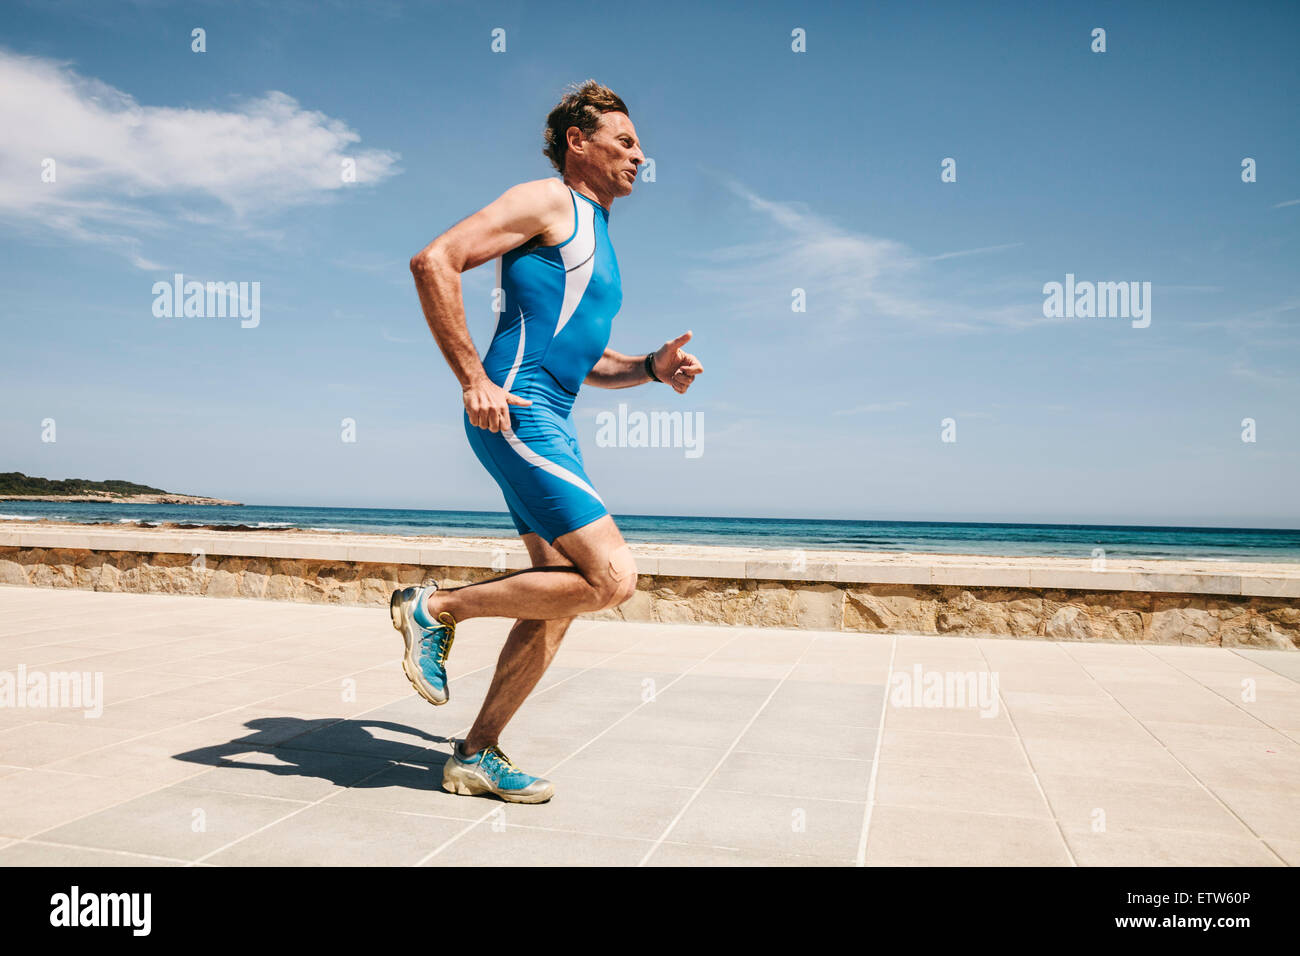 Spain, Mallorca, Sa Coma, triathlet running along beach promenade Stock Photo